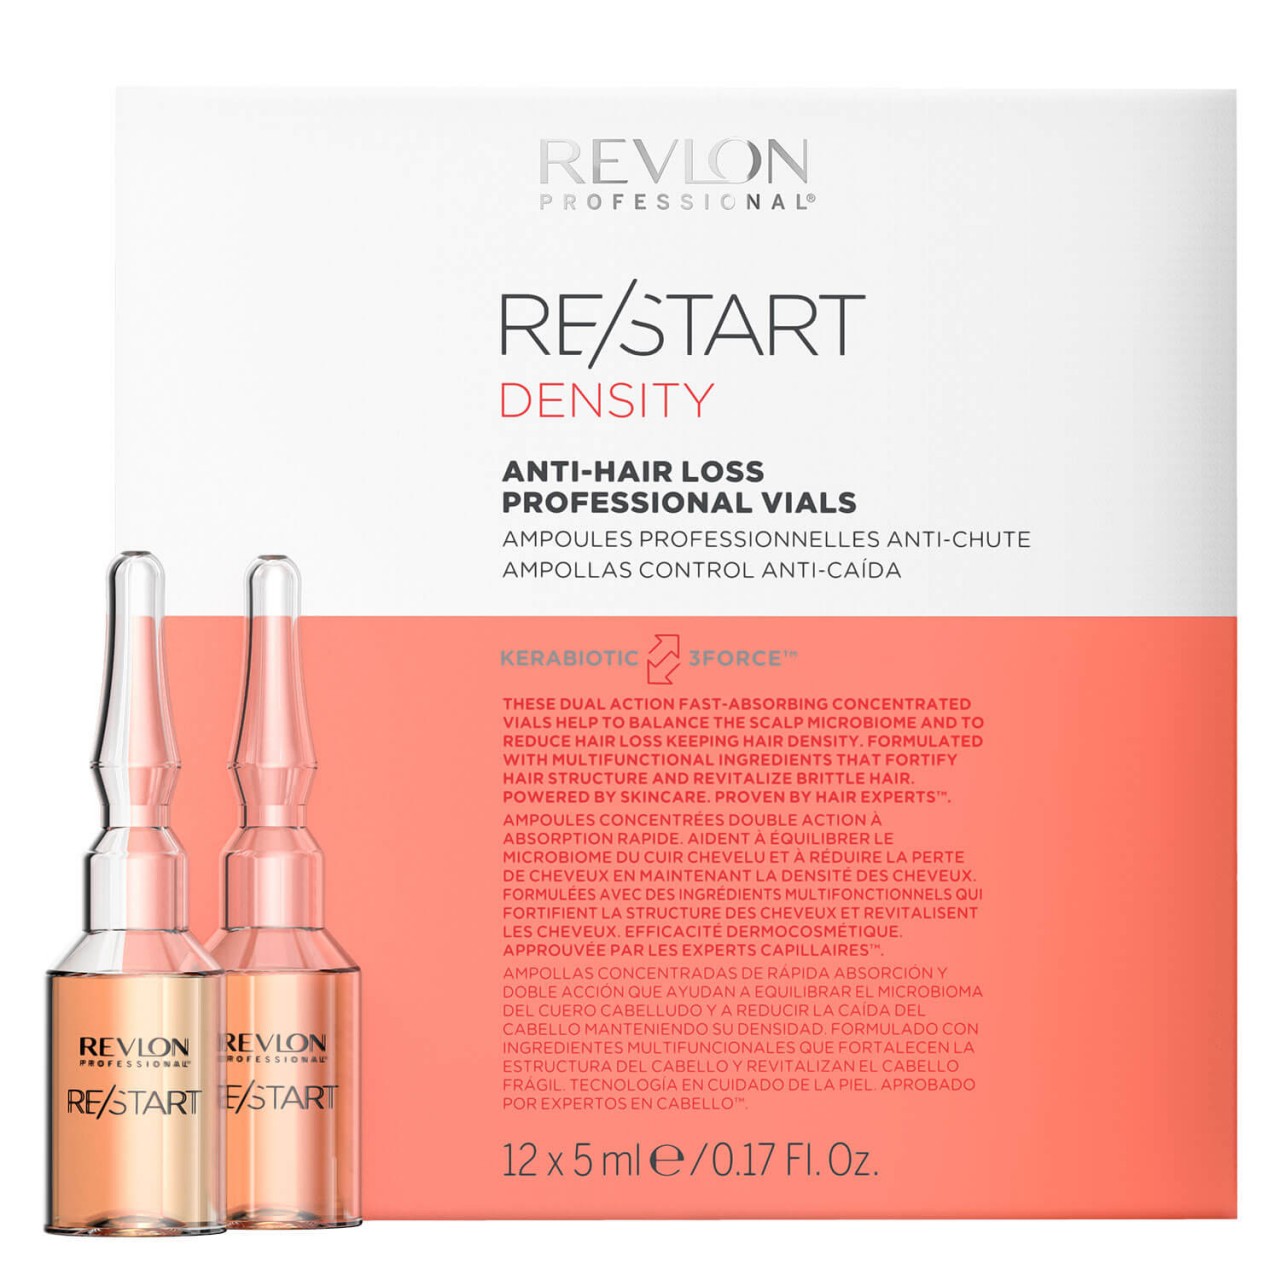 RE/START DENSITY - Anti-Hair Loss Professional Vials von Revlon Professional